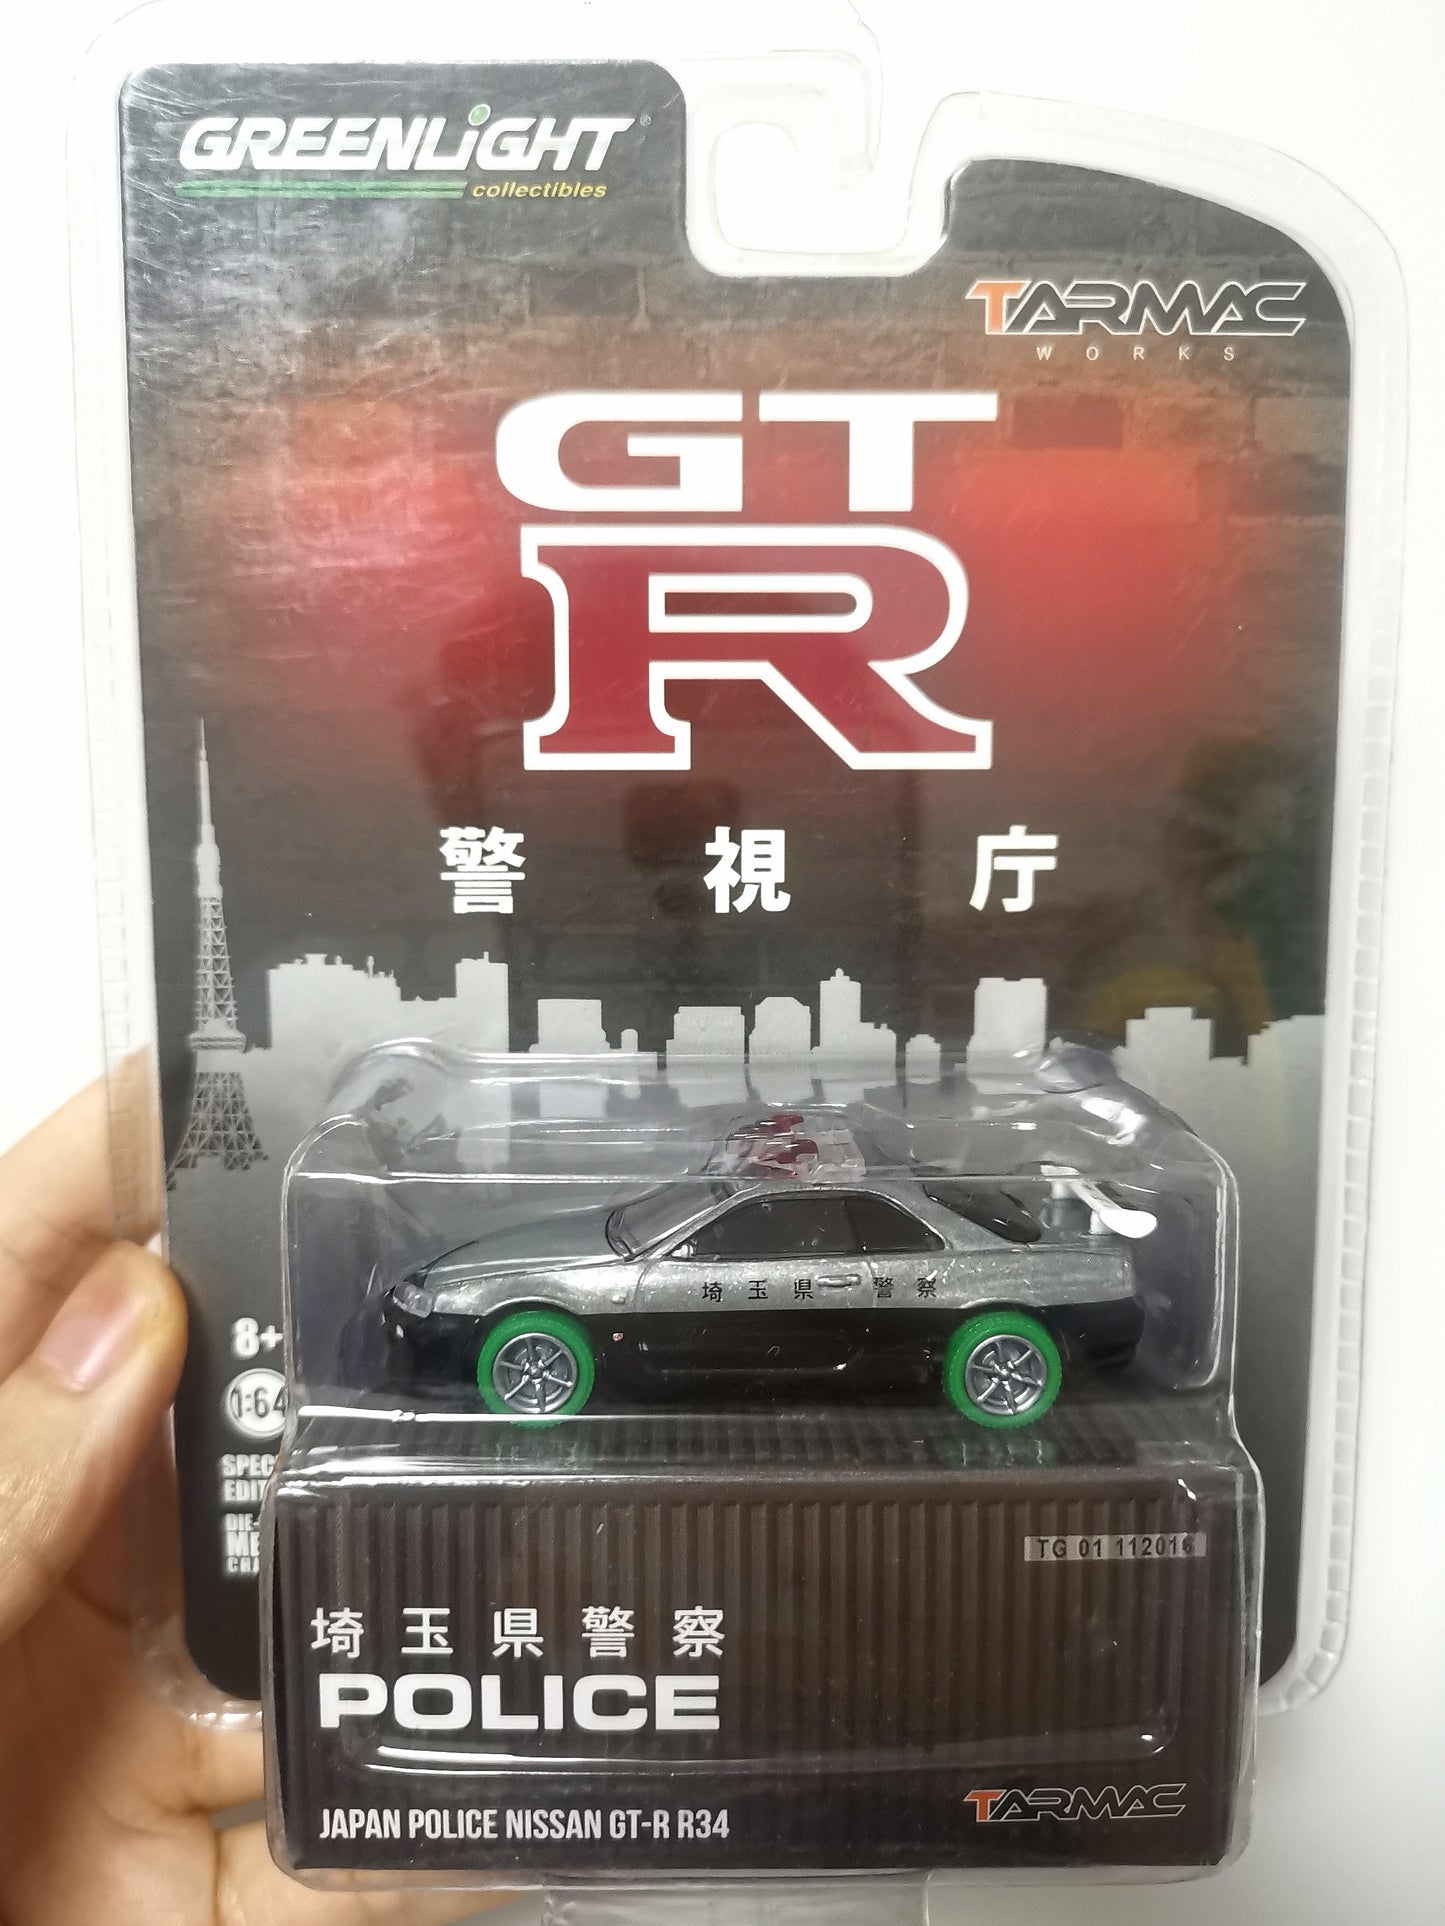 CHASE CAR Tarmacworks X GreenLight
1:64 Scale
Japan Police Nissan Skyline GT-R R34